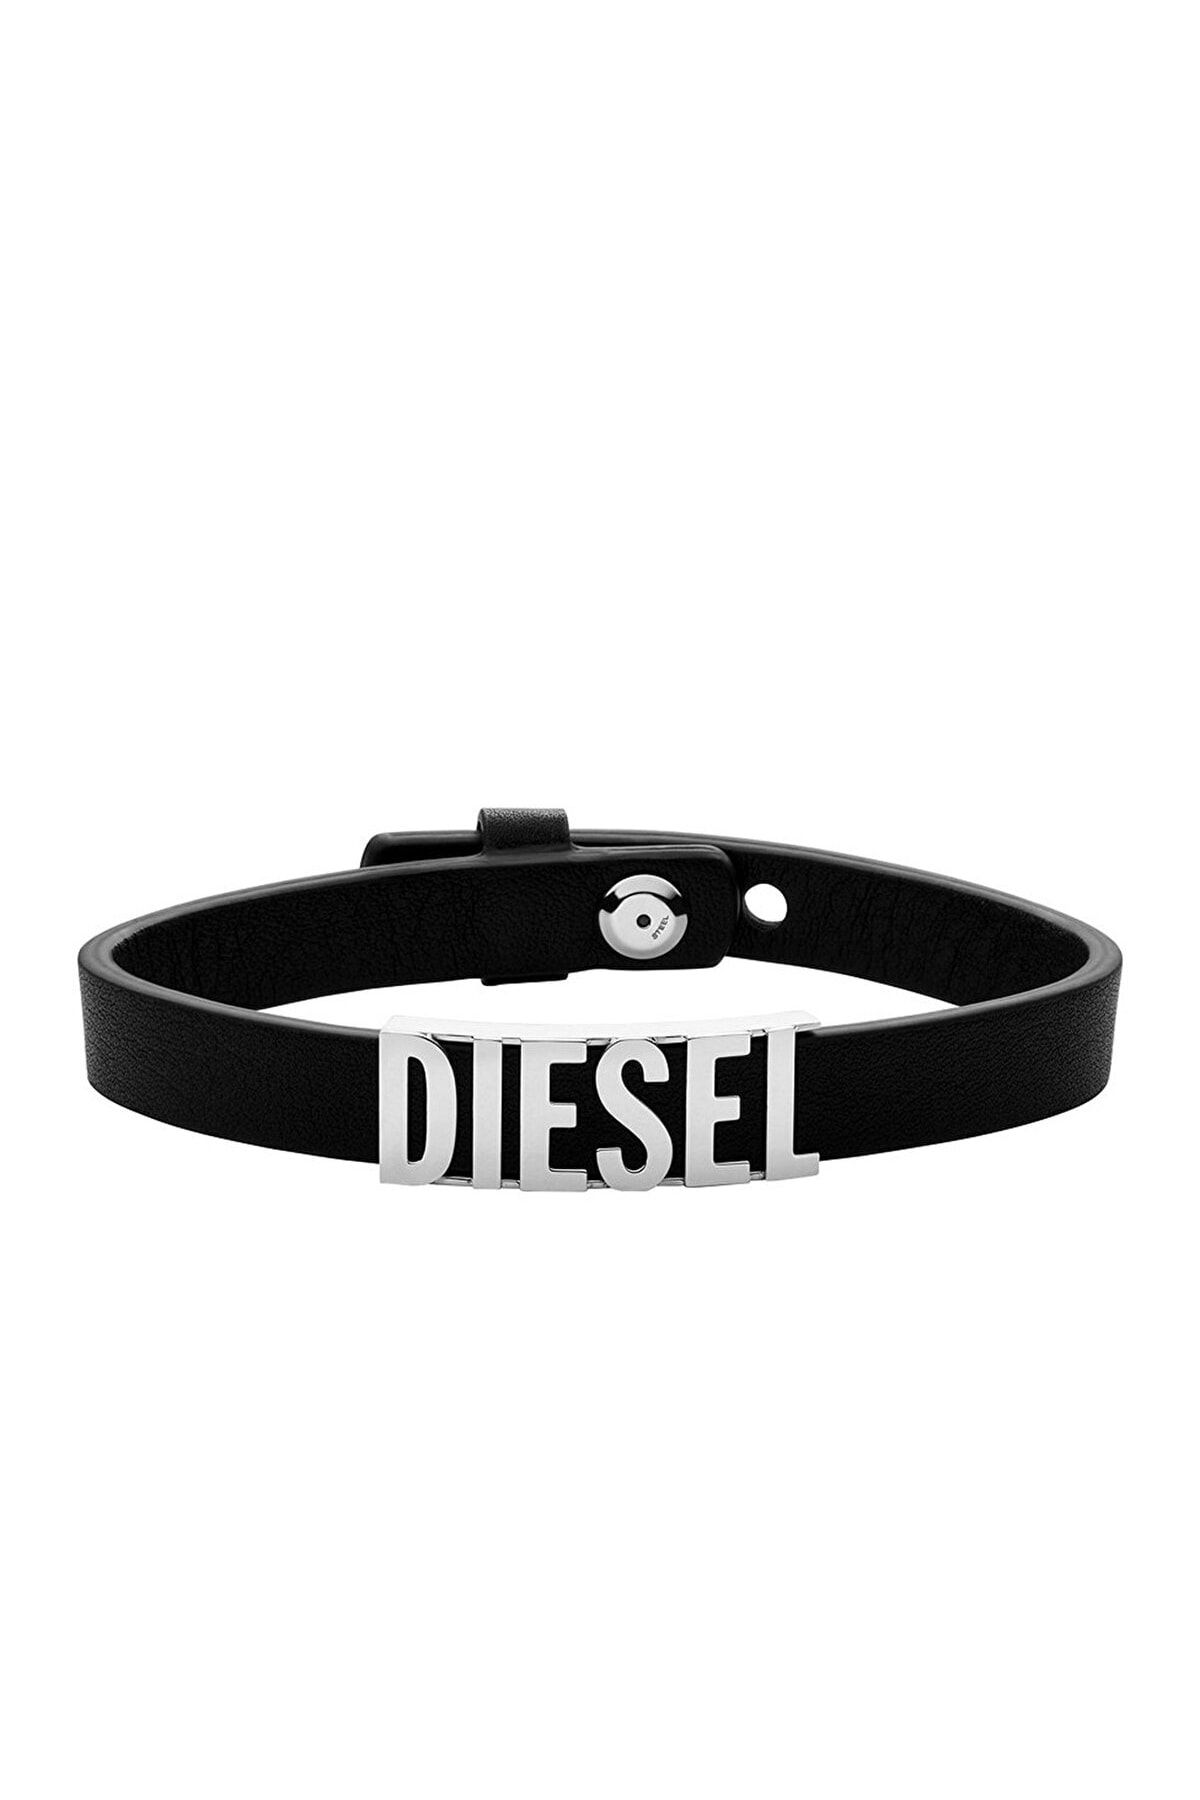 Diesel Djdx1346-040 Erkek Bileklik